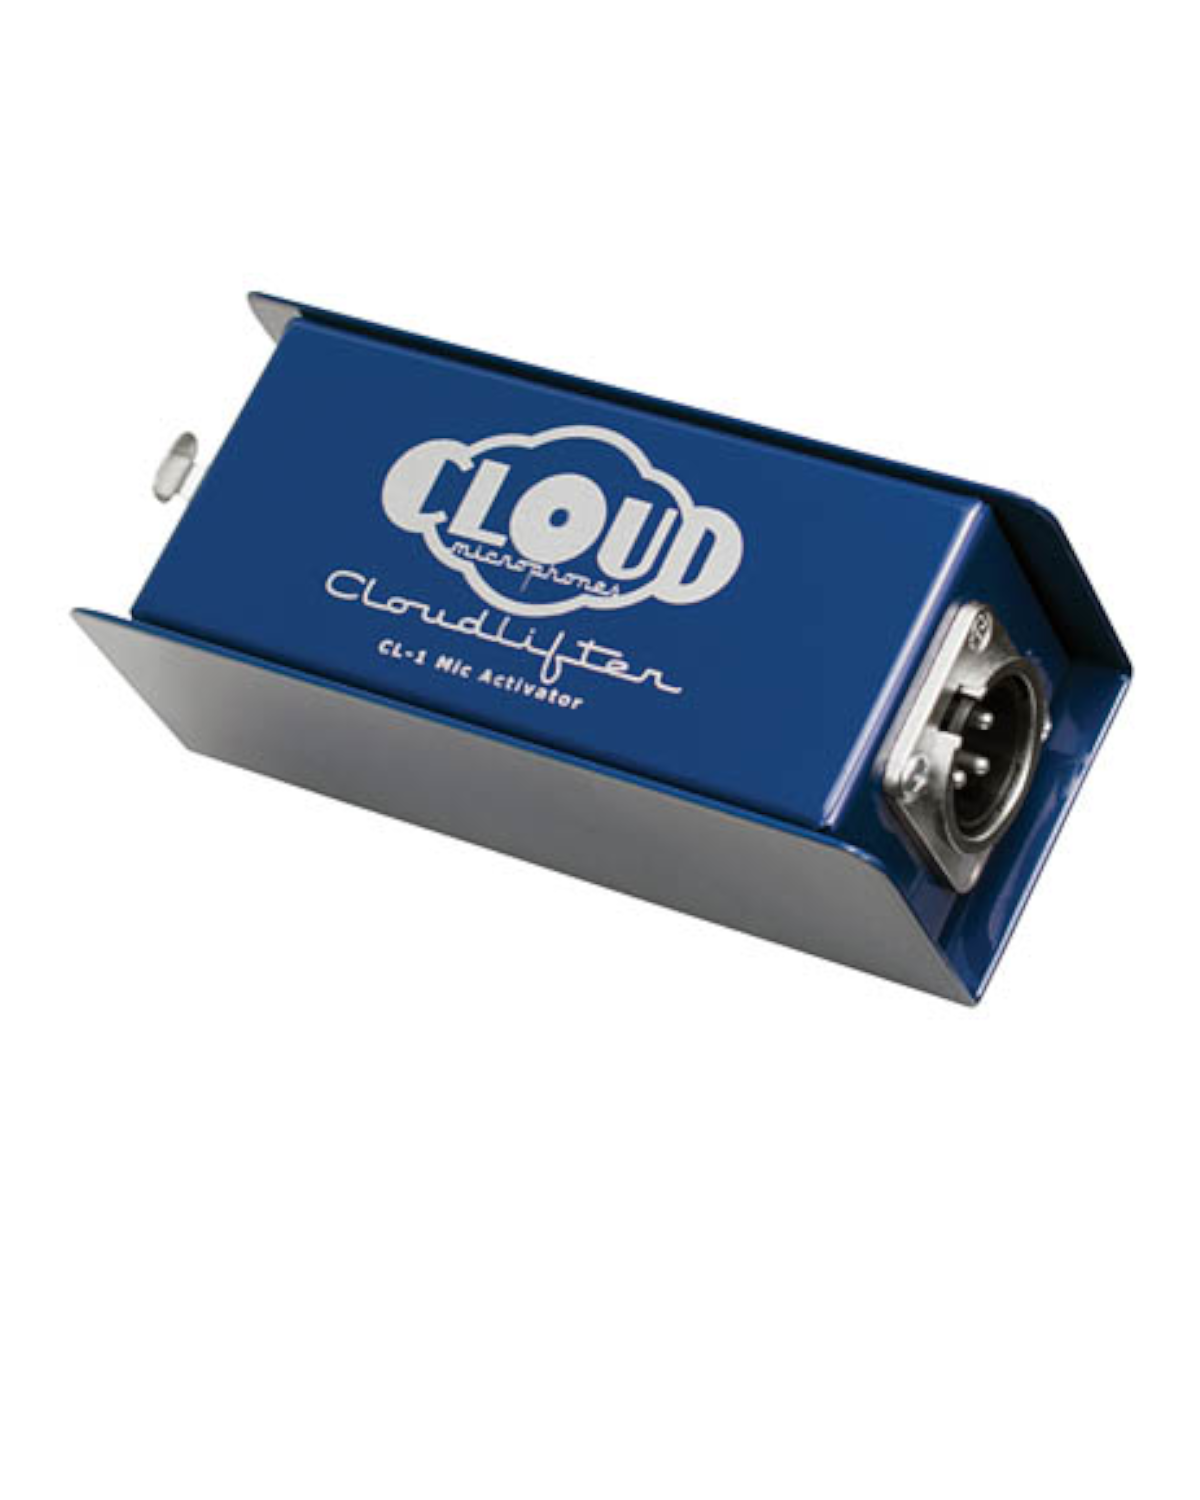 Cloud Cloudlifter CL1 - Tone Tailors